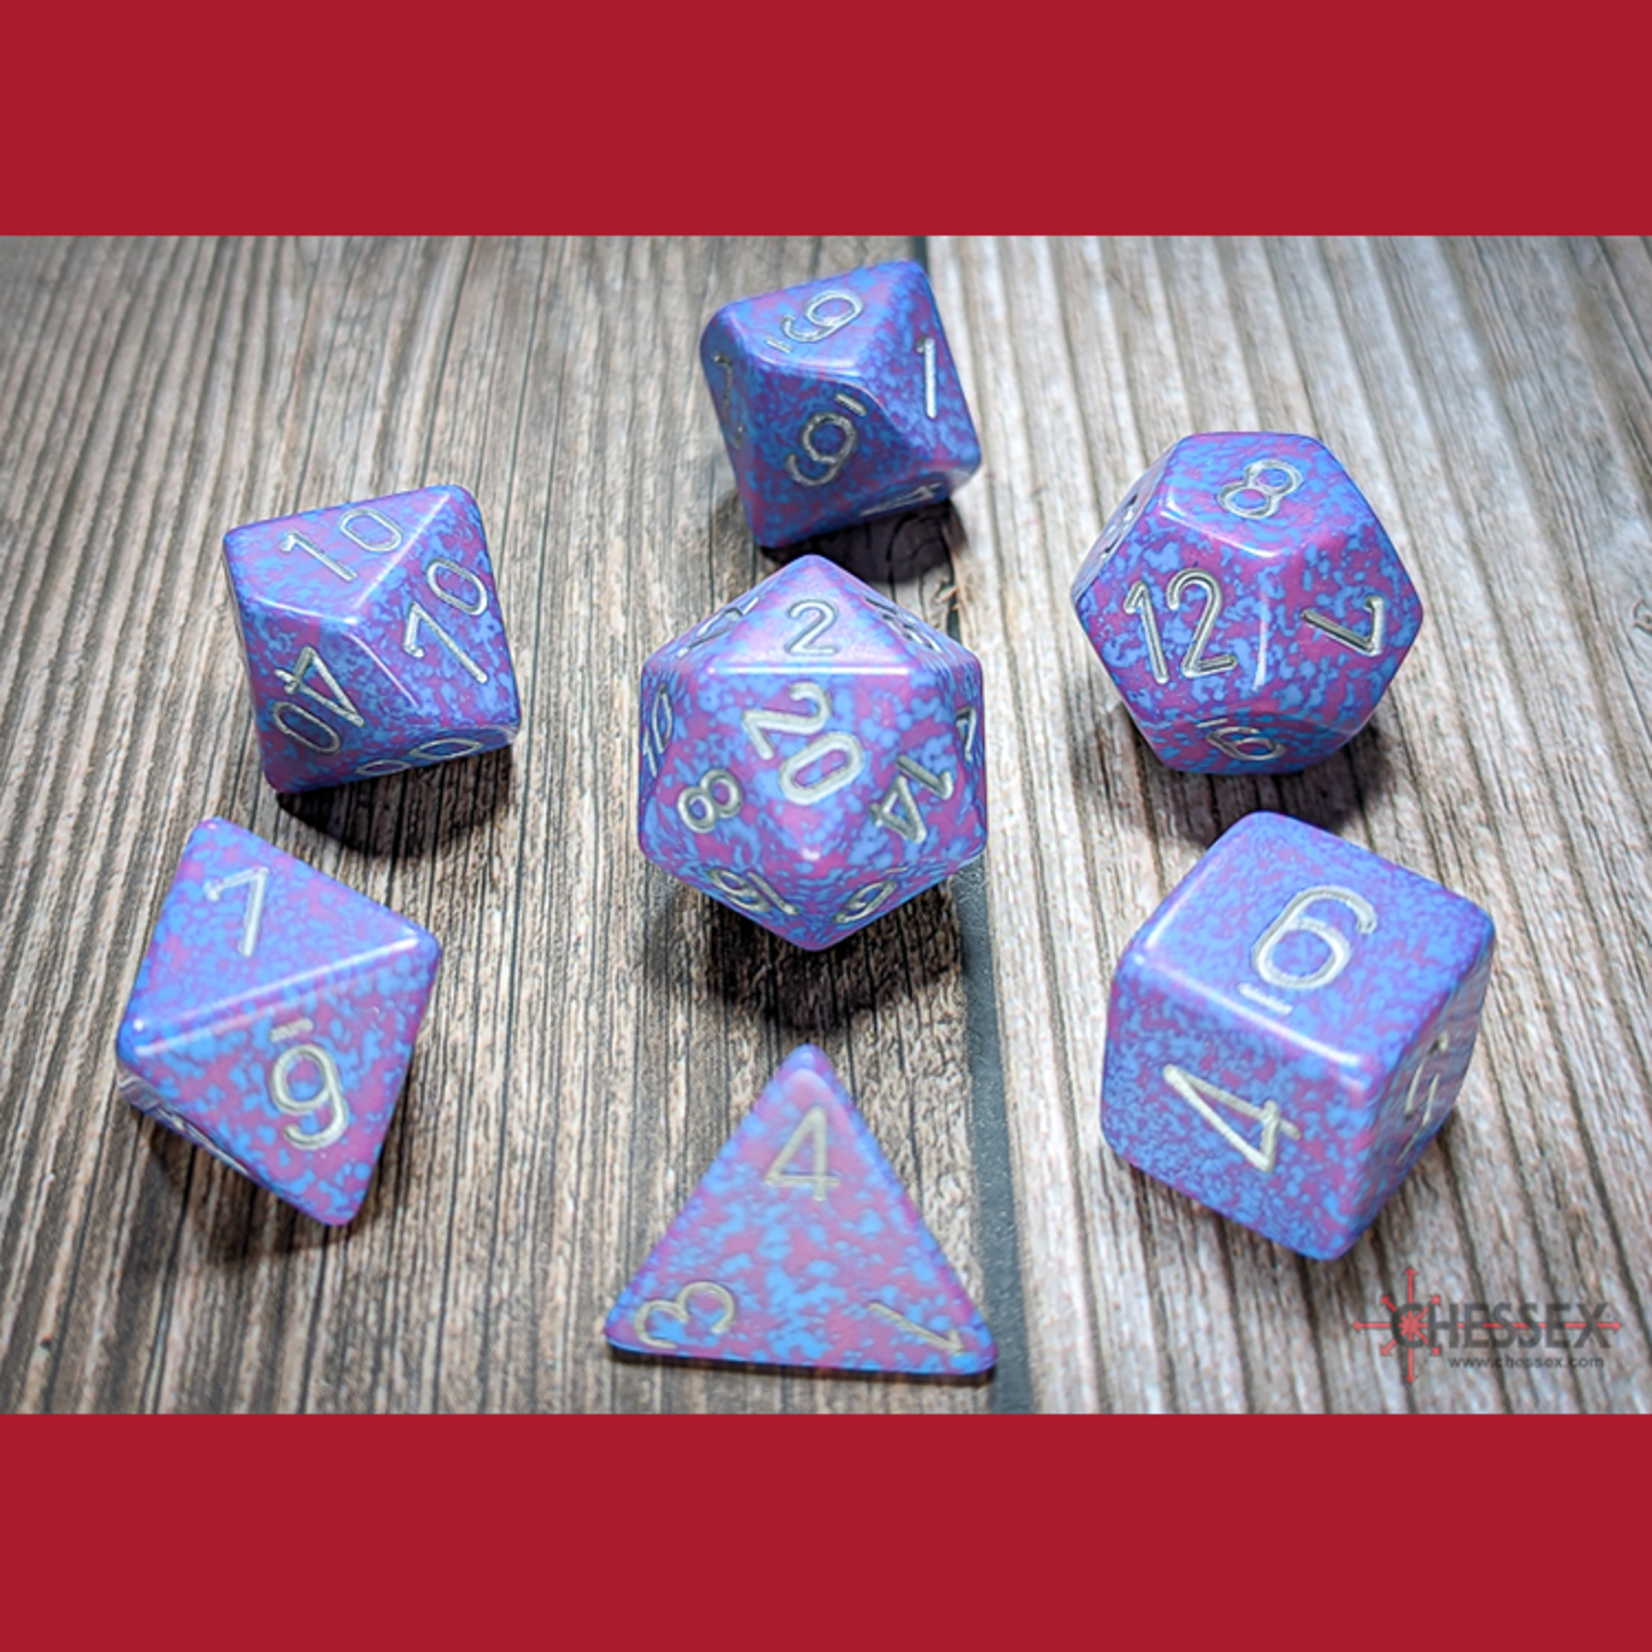 Chessex CHX 25347 Speckled Silver Tetra Polyhedral 7-die Set